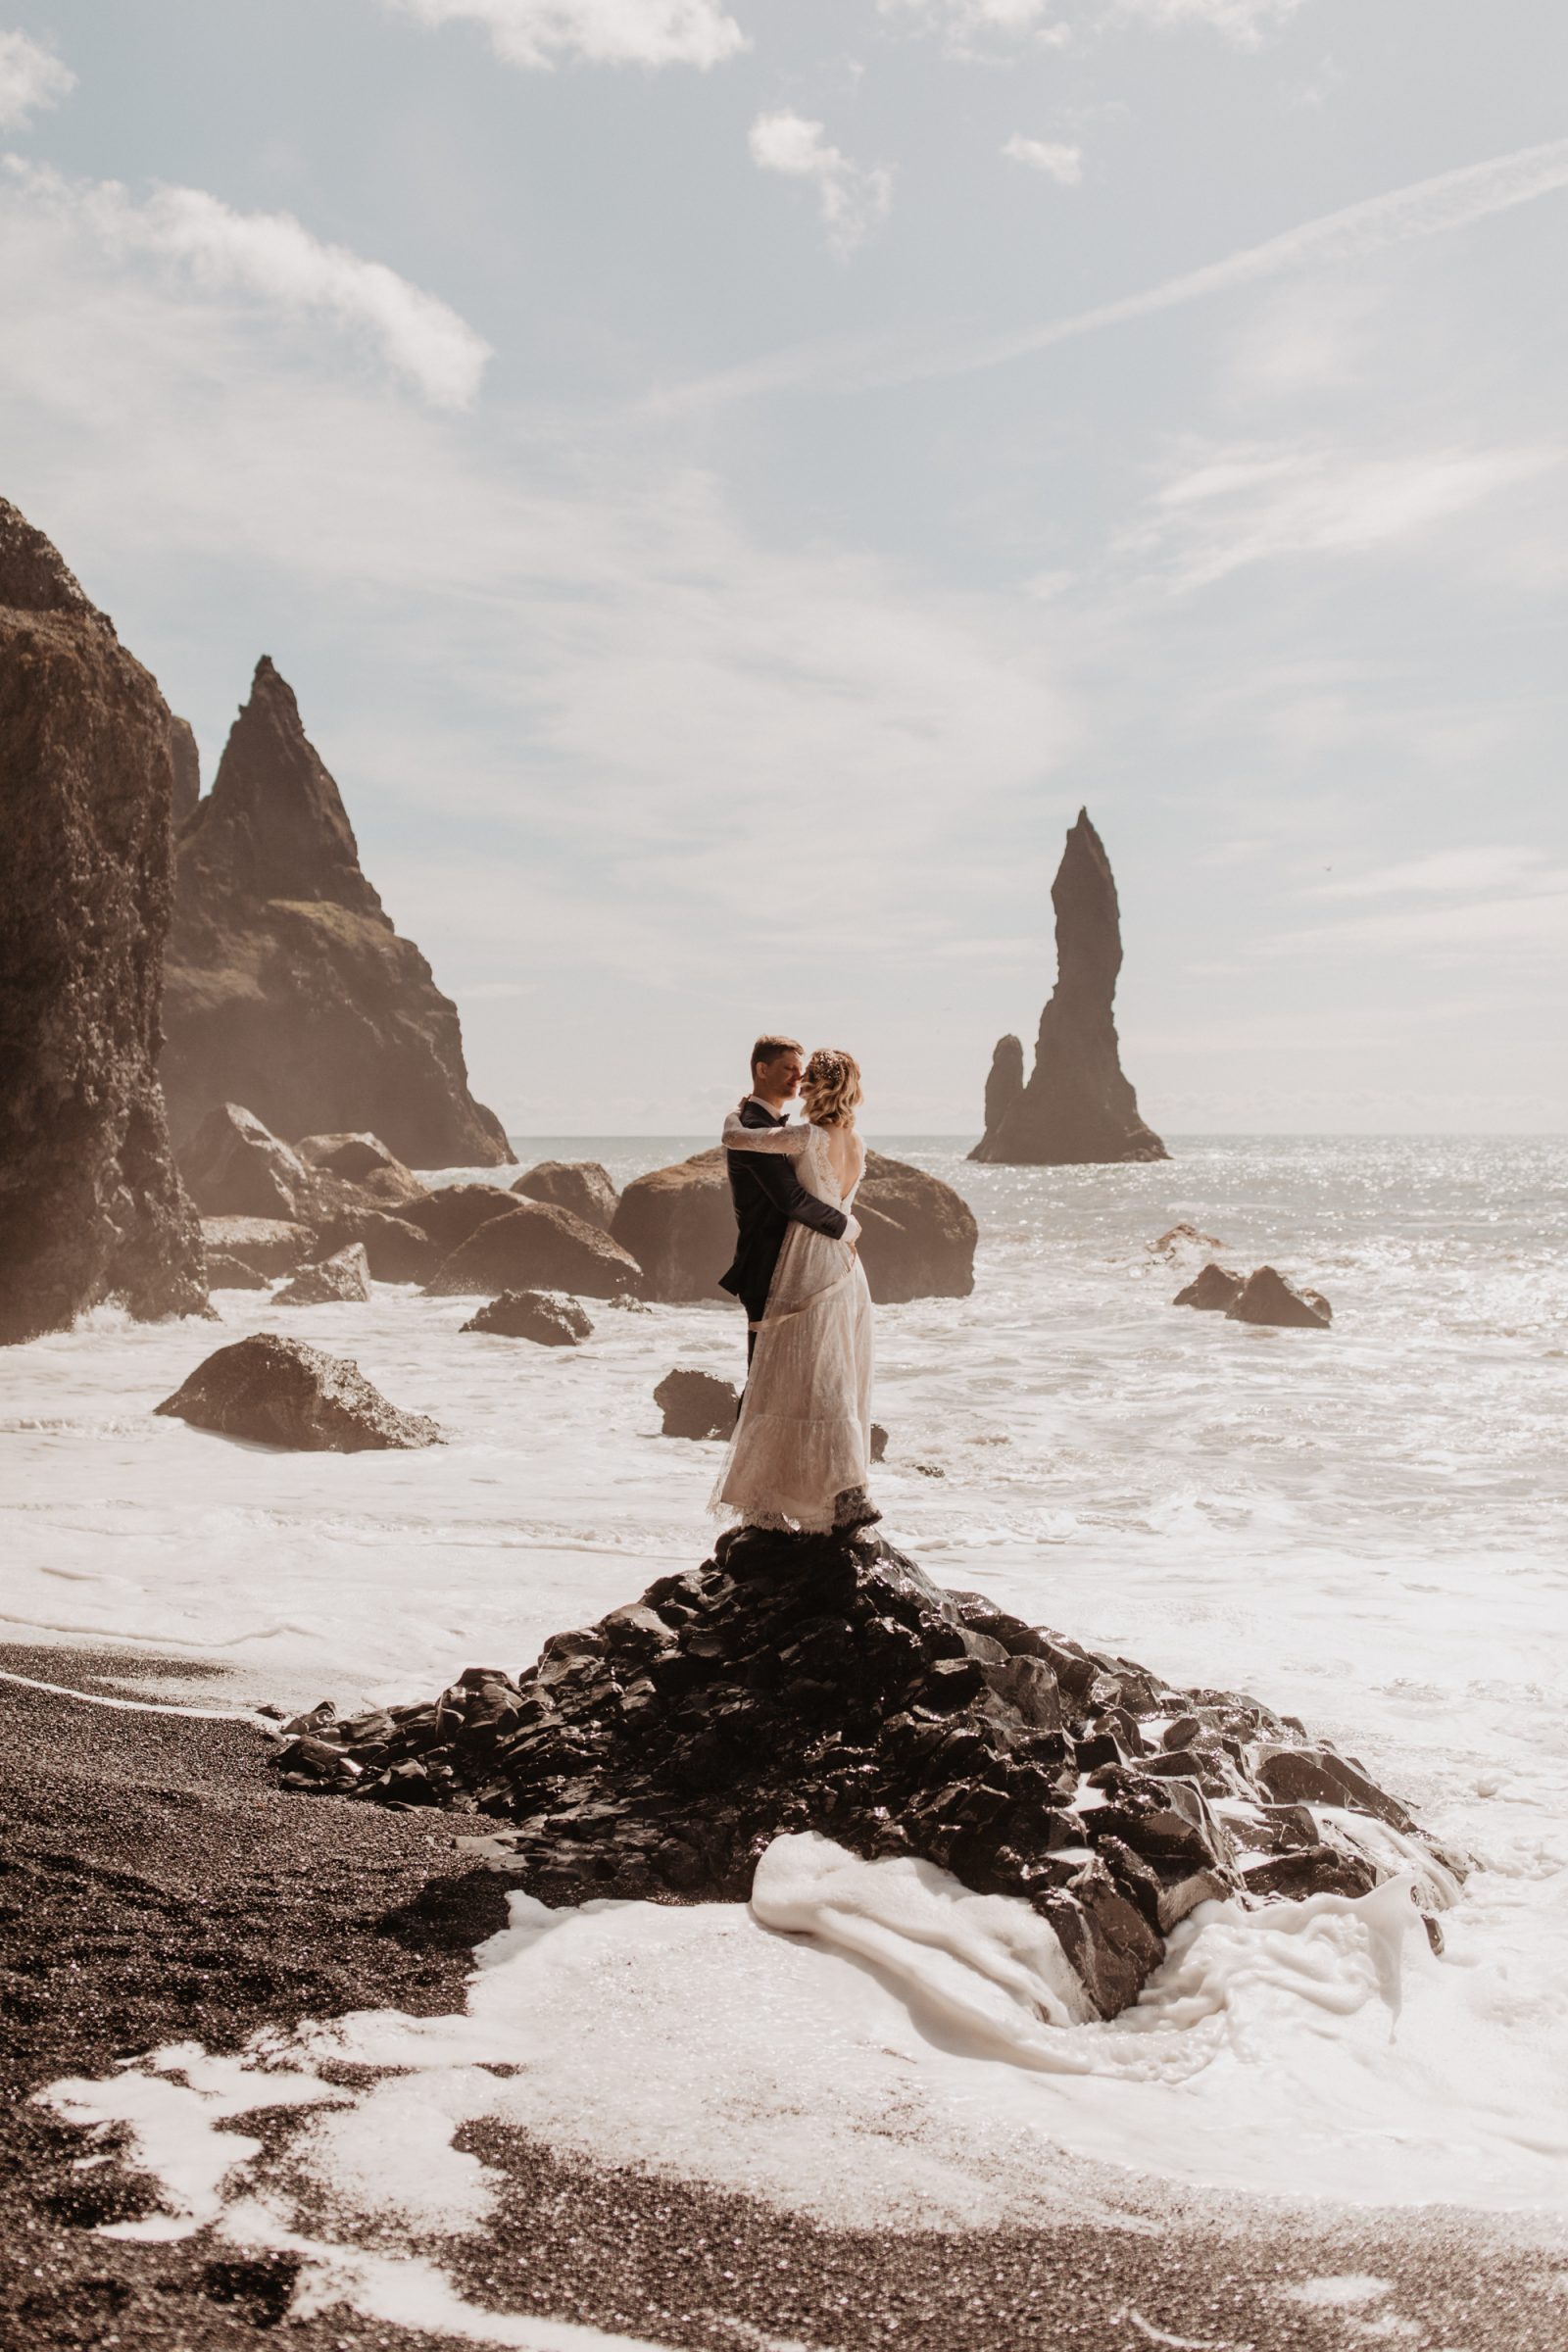 Wedding in Iceland by Emilija Bogdanova